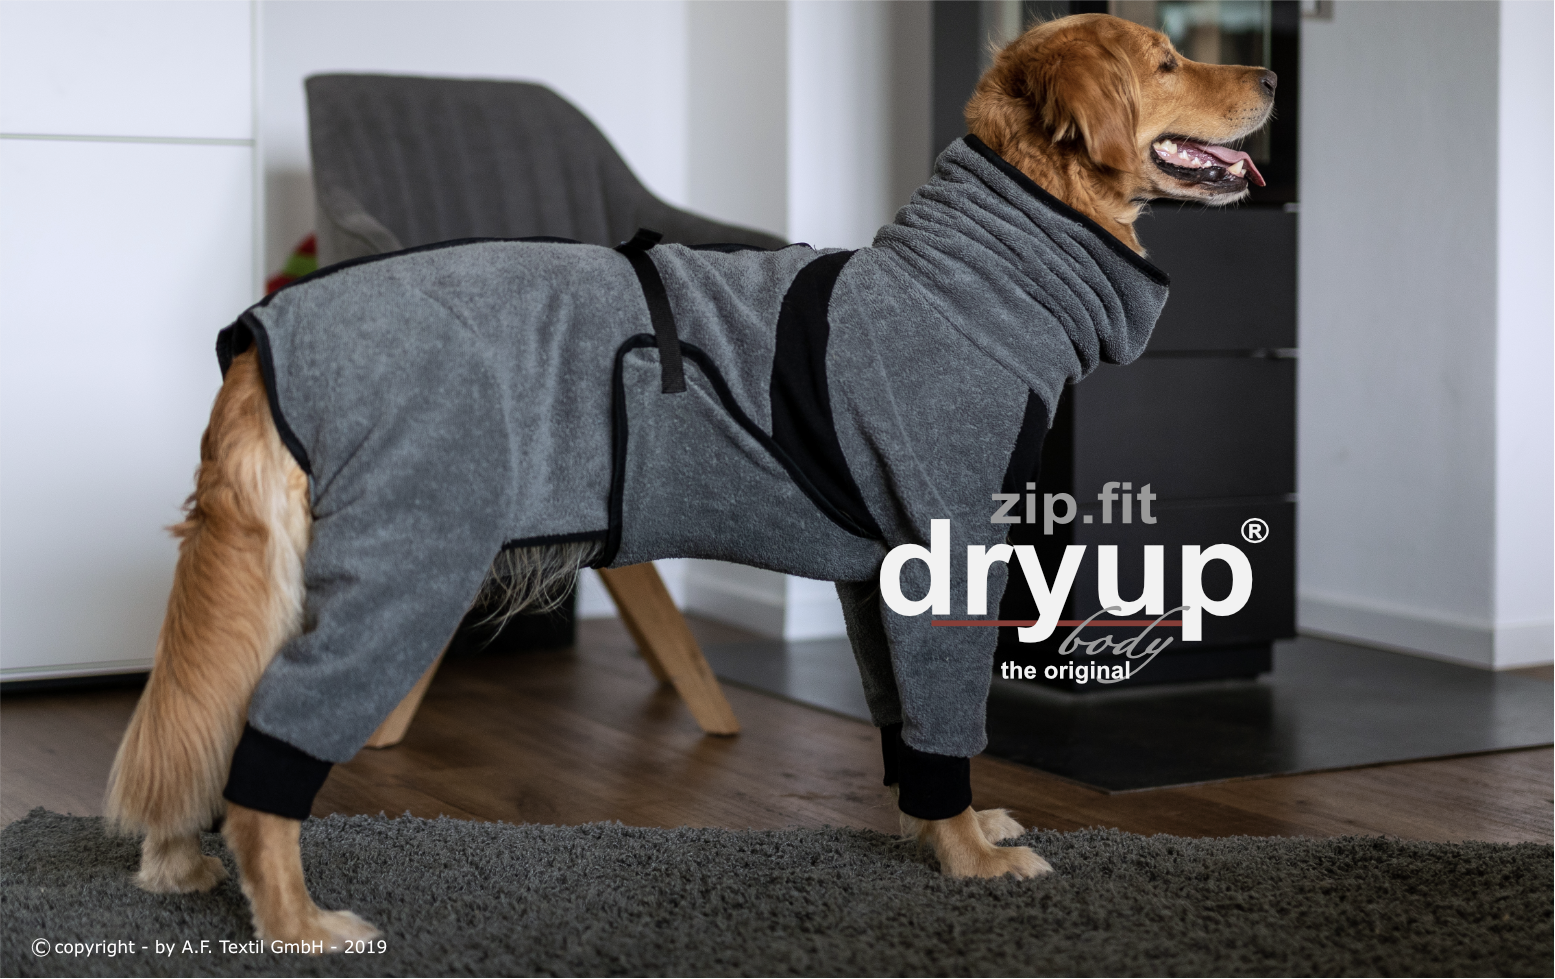 Dryup body zip.fit grey